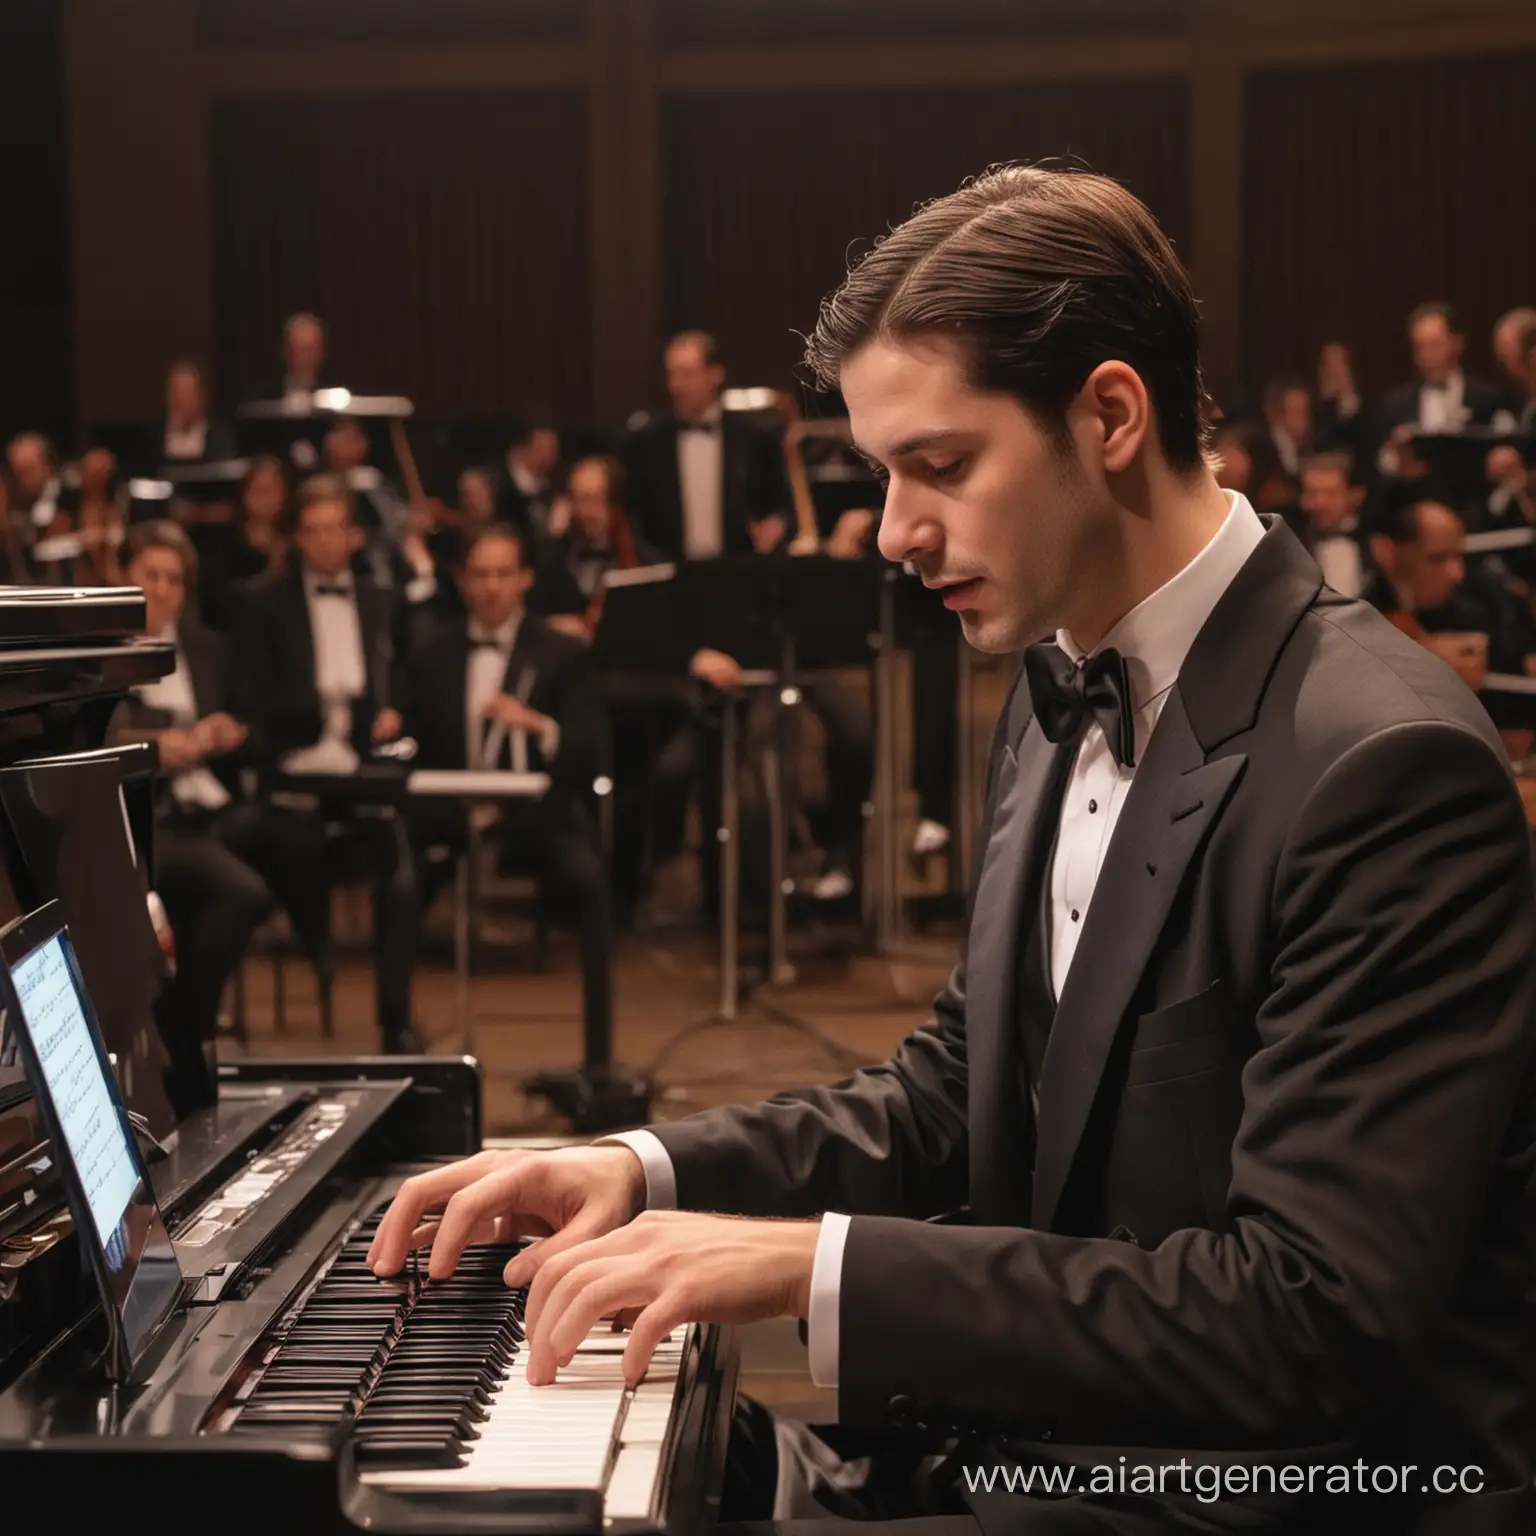 Elegant-TuxedoClad-Pianist-Masterfully-Performing-on-Laptop-Keyboard